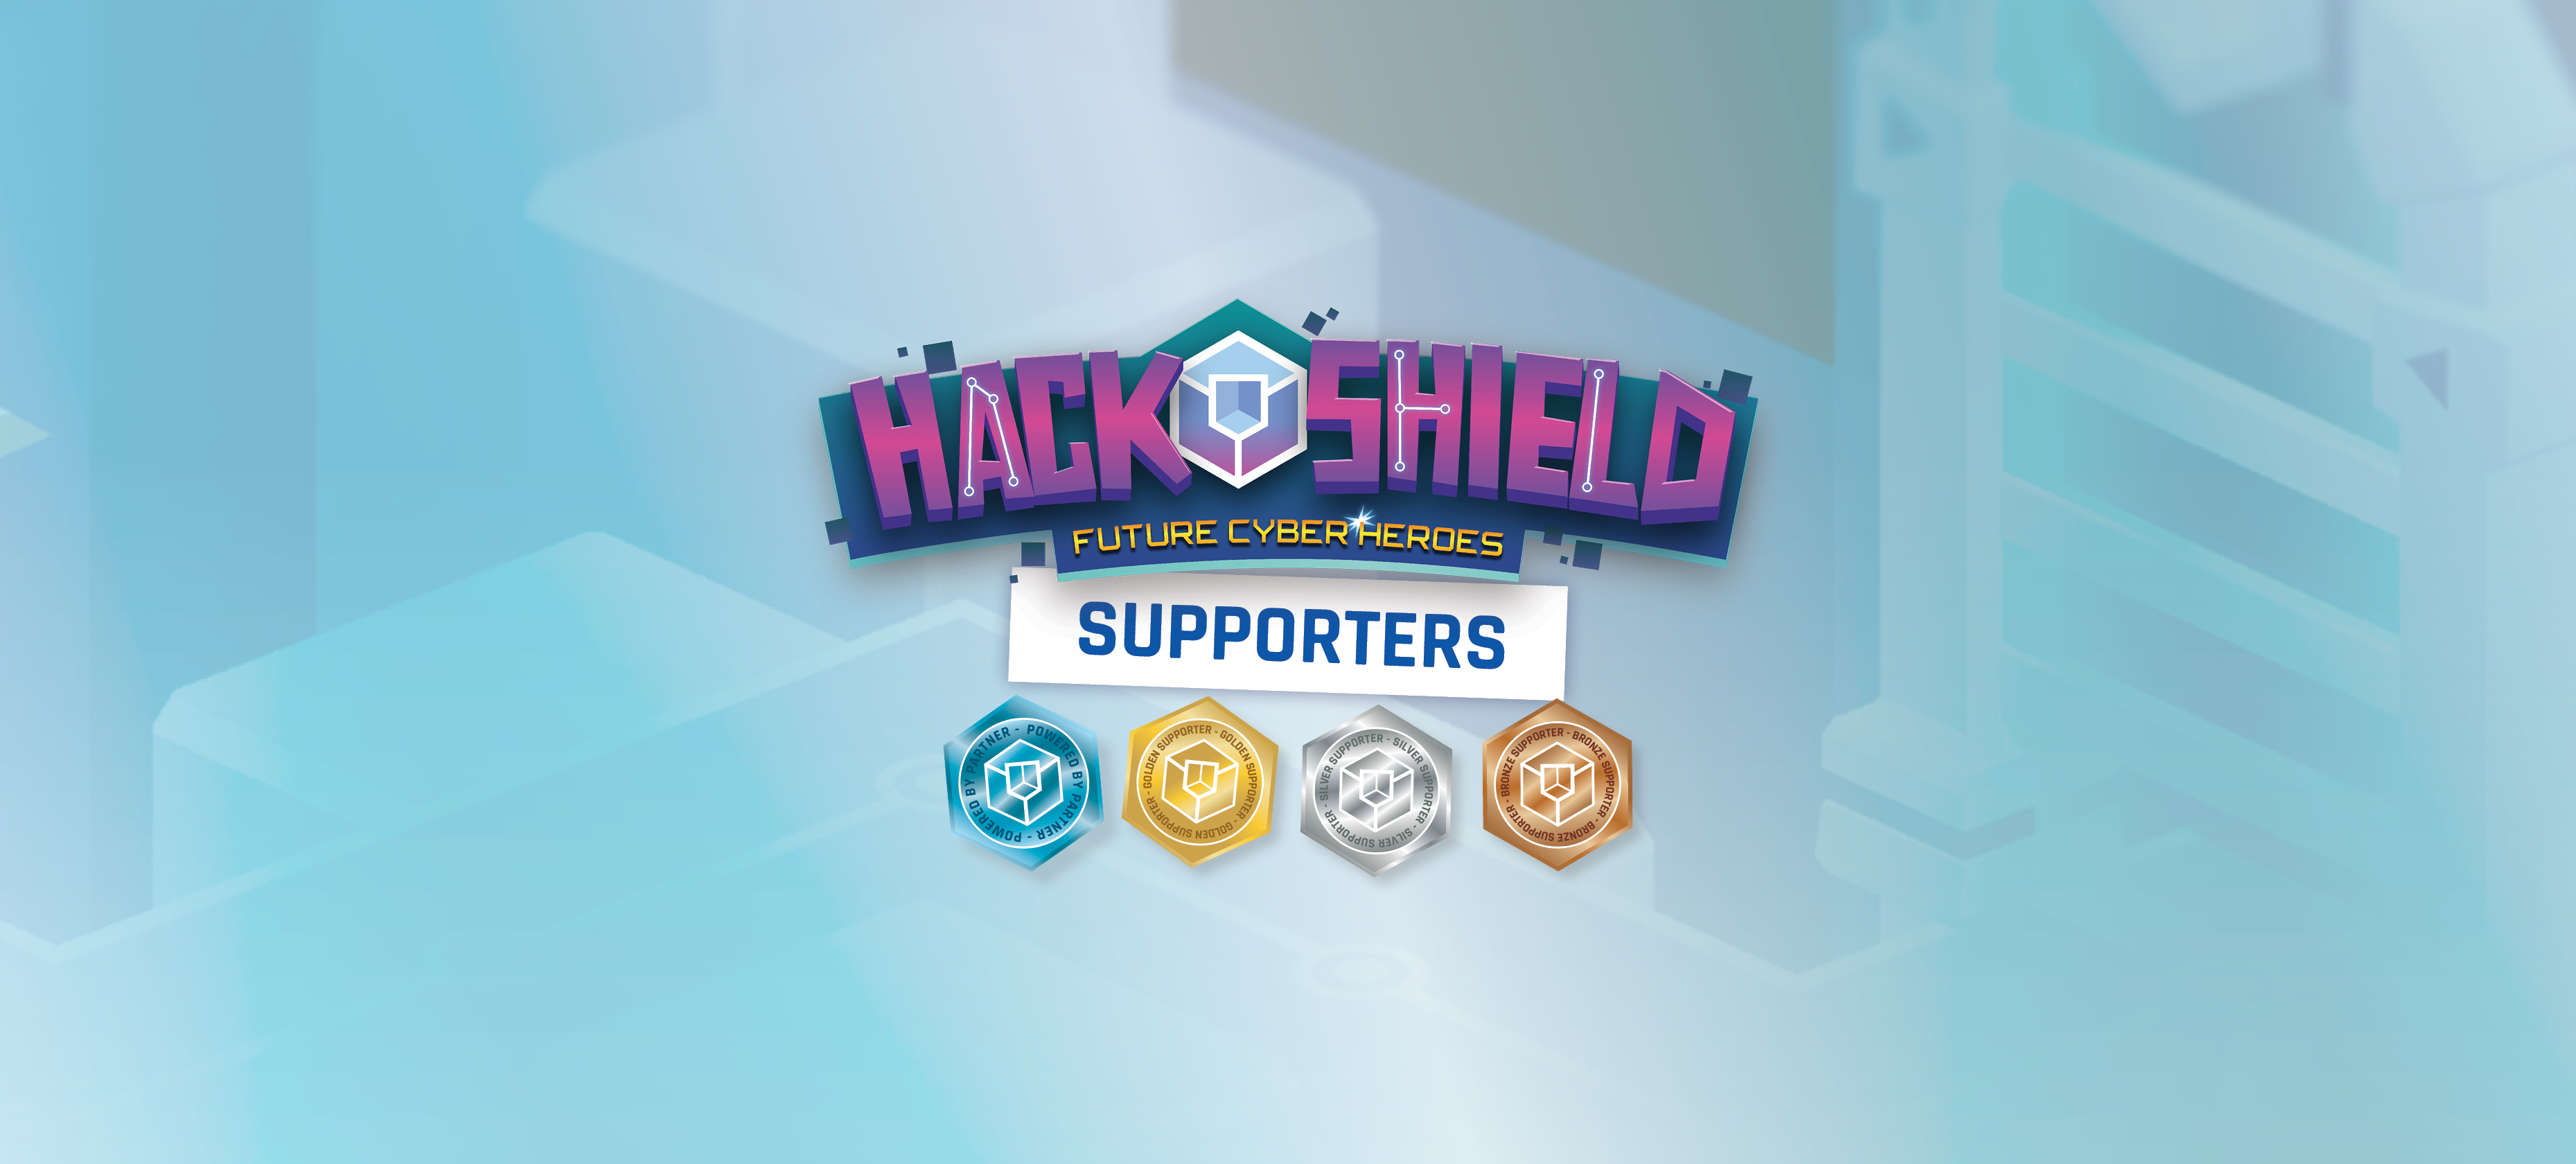 hackshield supporters